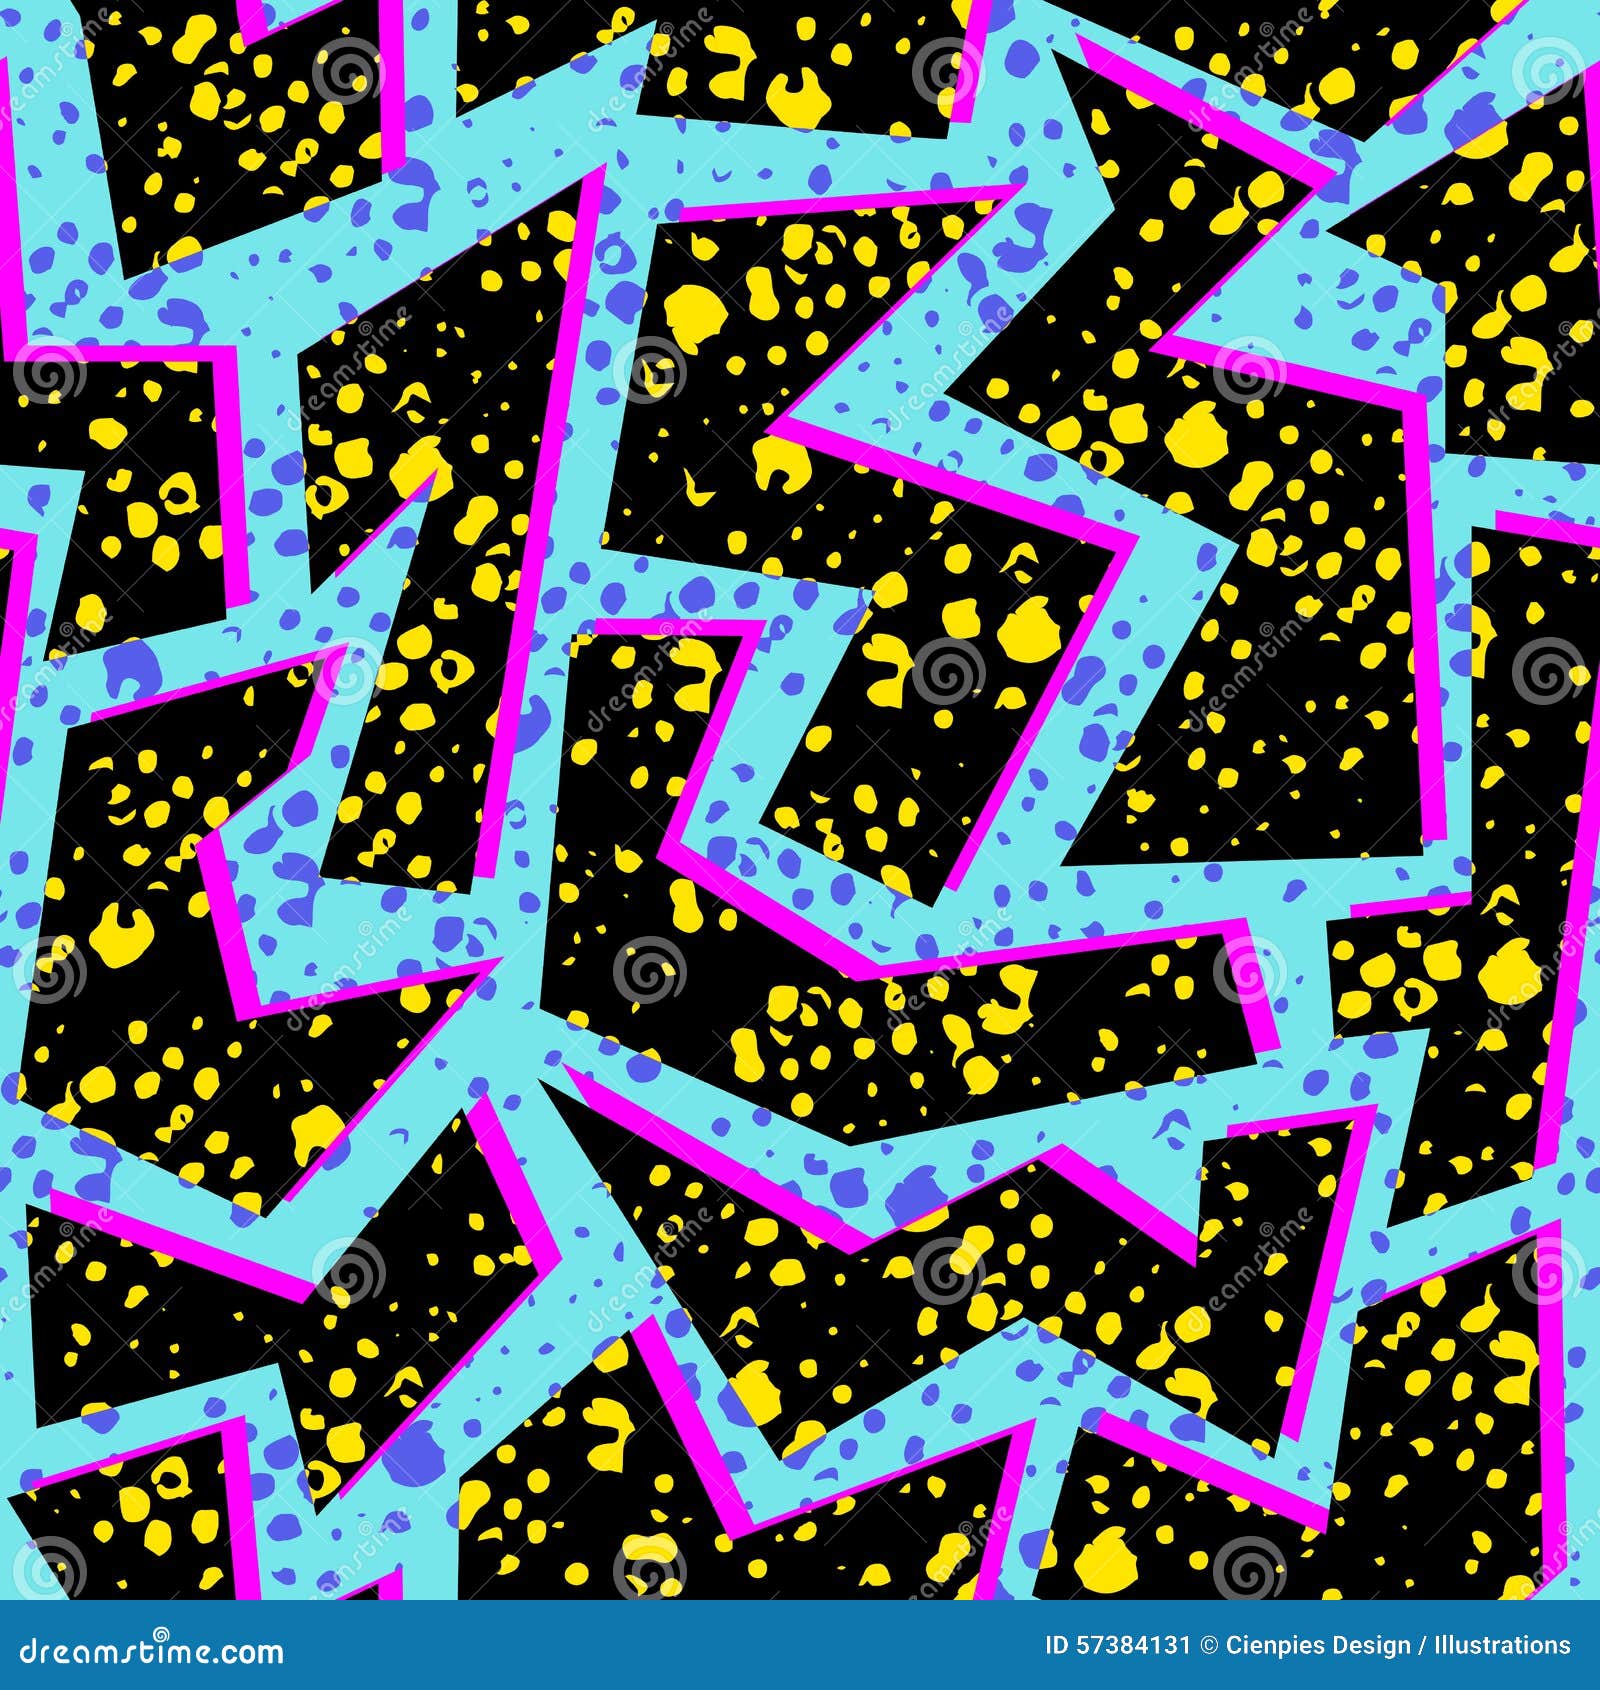 Retro 80s pattern background illustration